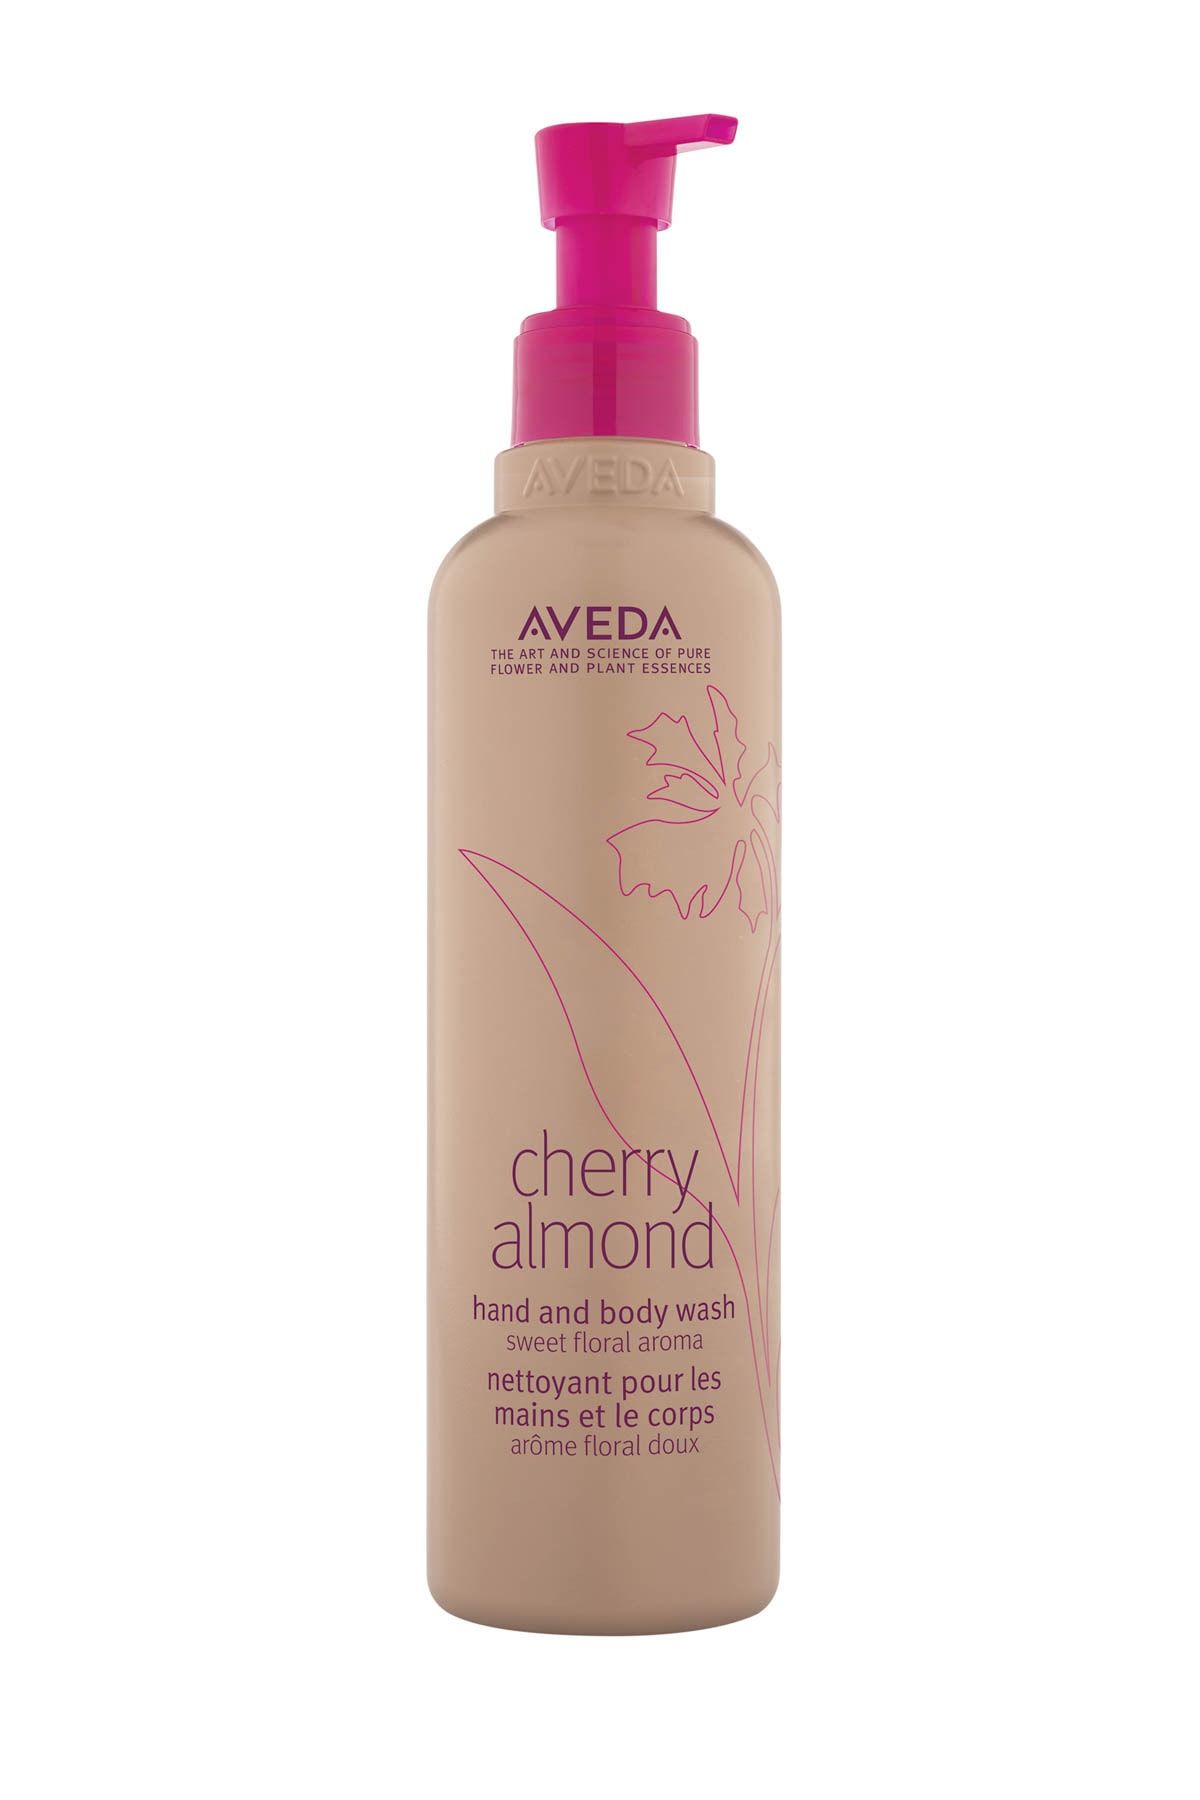 Aveda Cherry Almond Hand and Body Wash